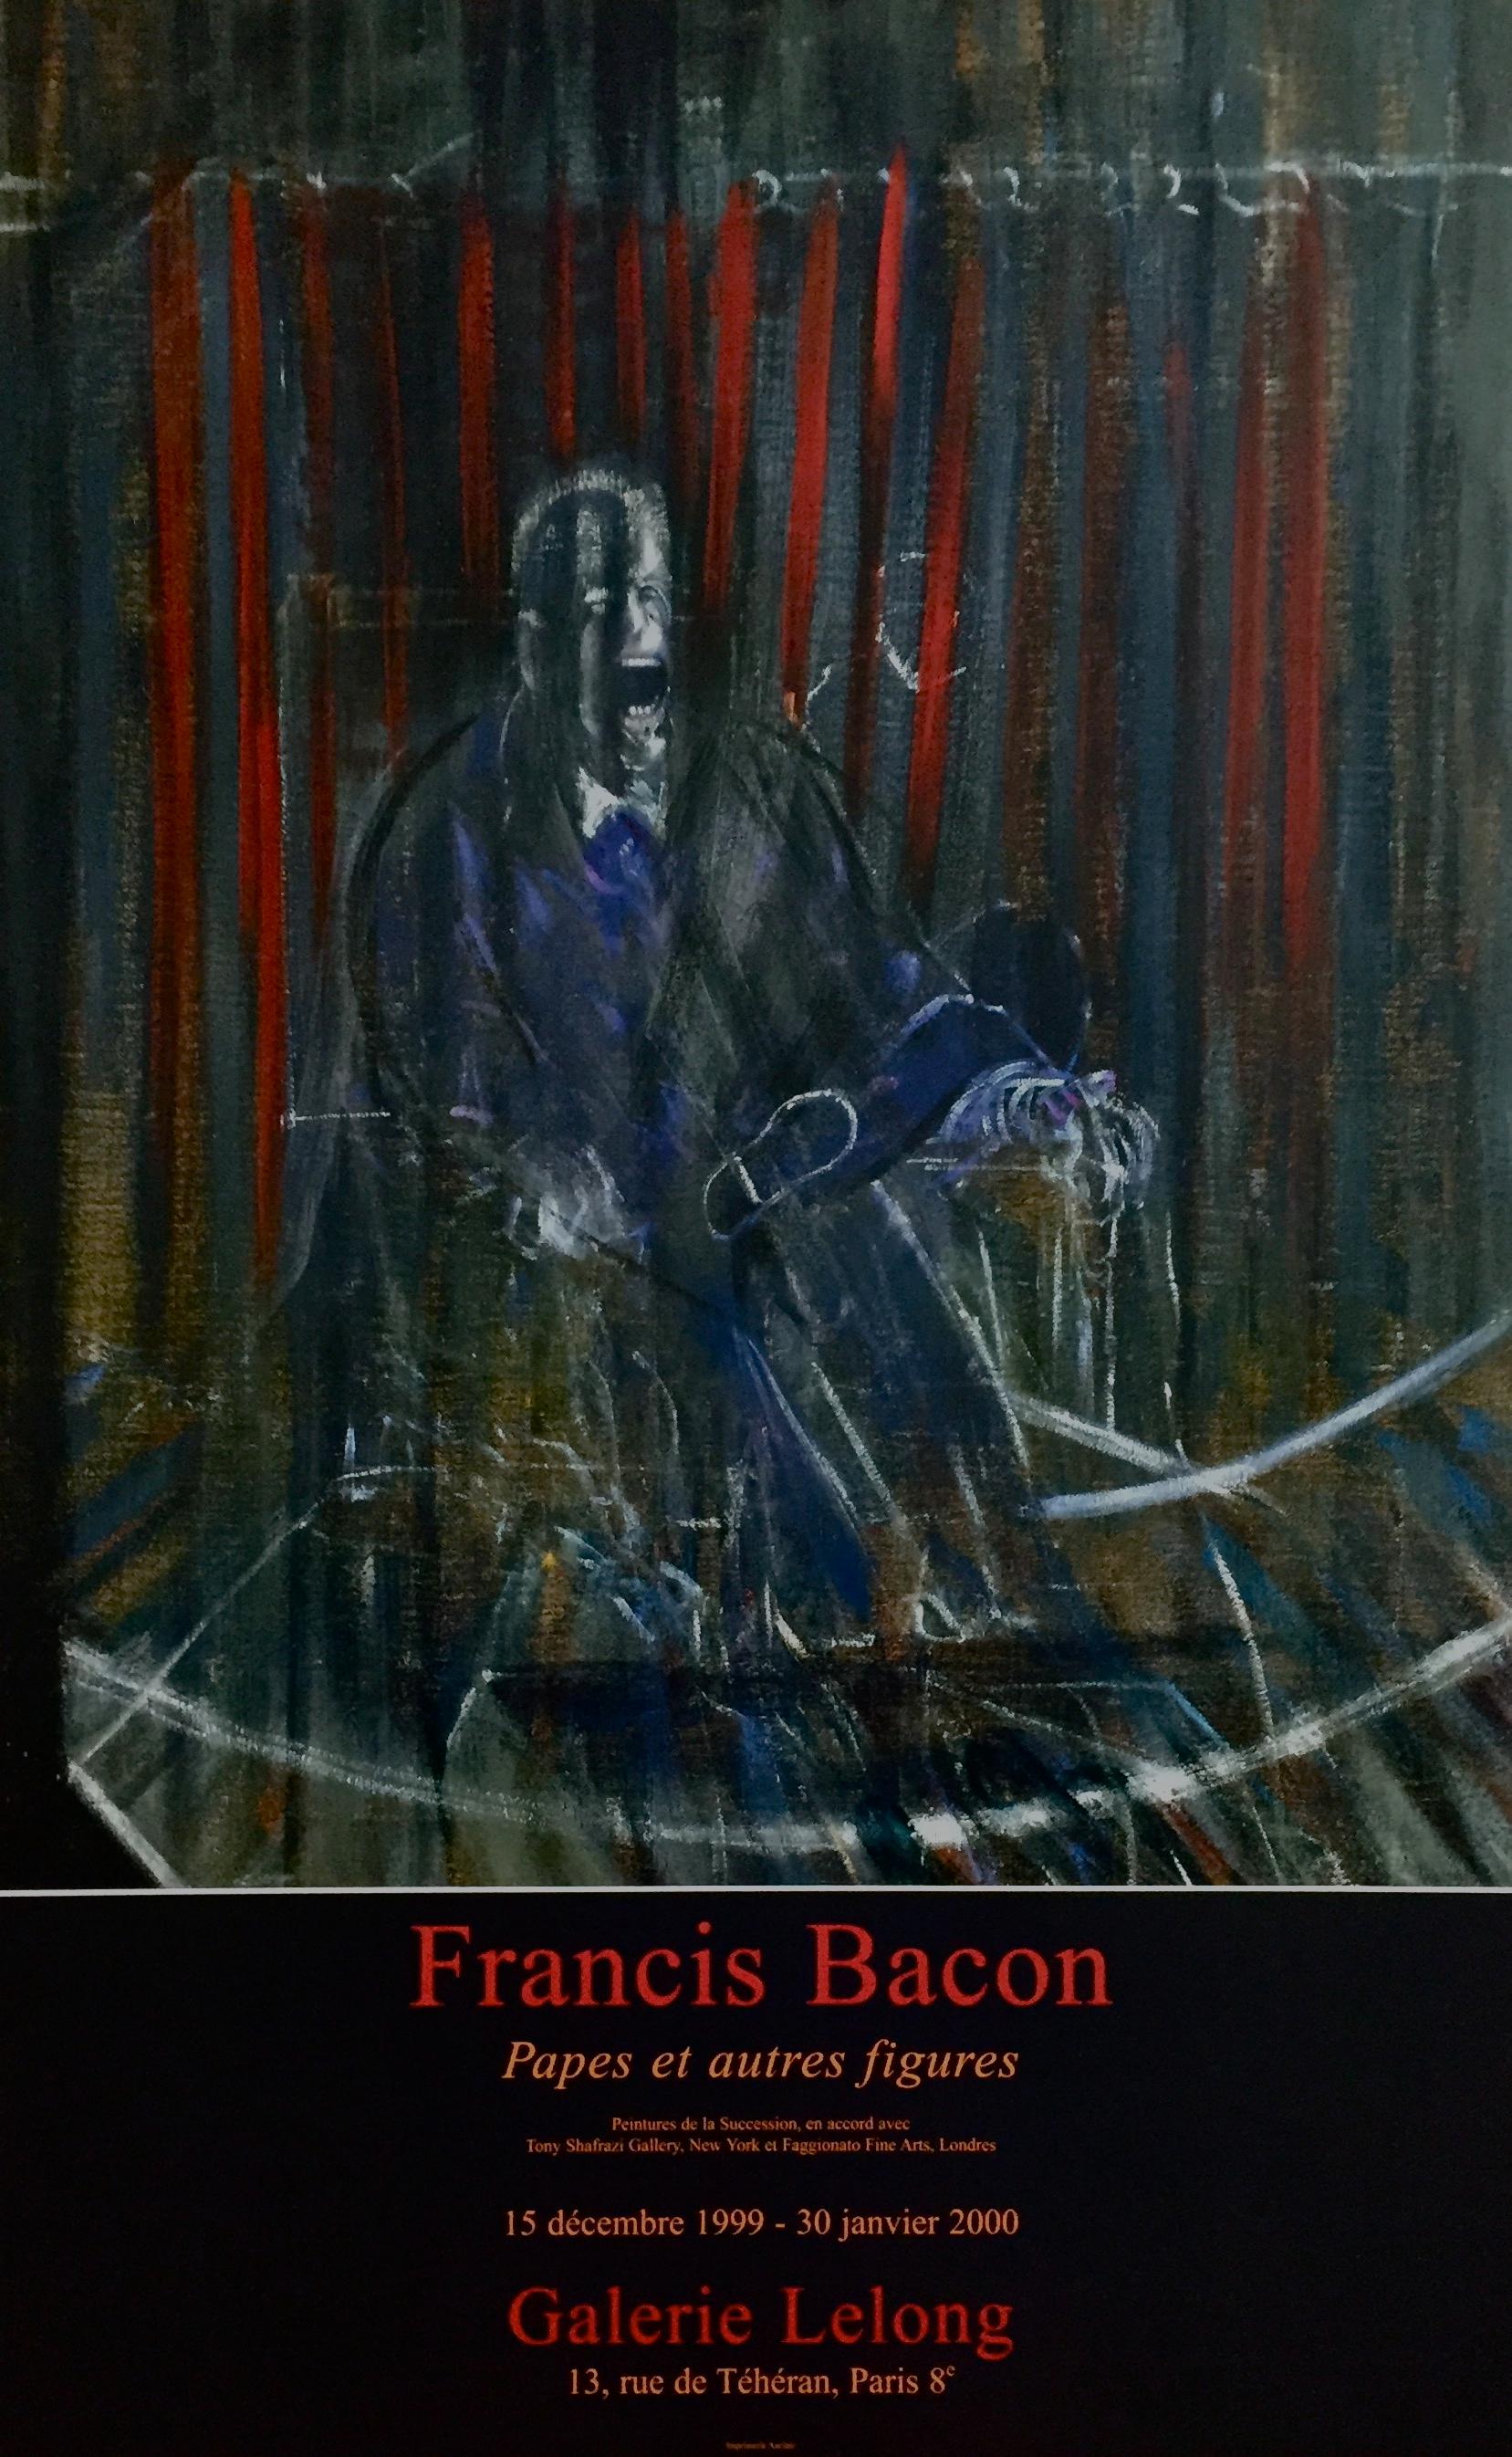 Francis Bacon Portrait Print - Bacon, Pope Innocent X